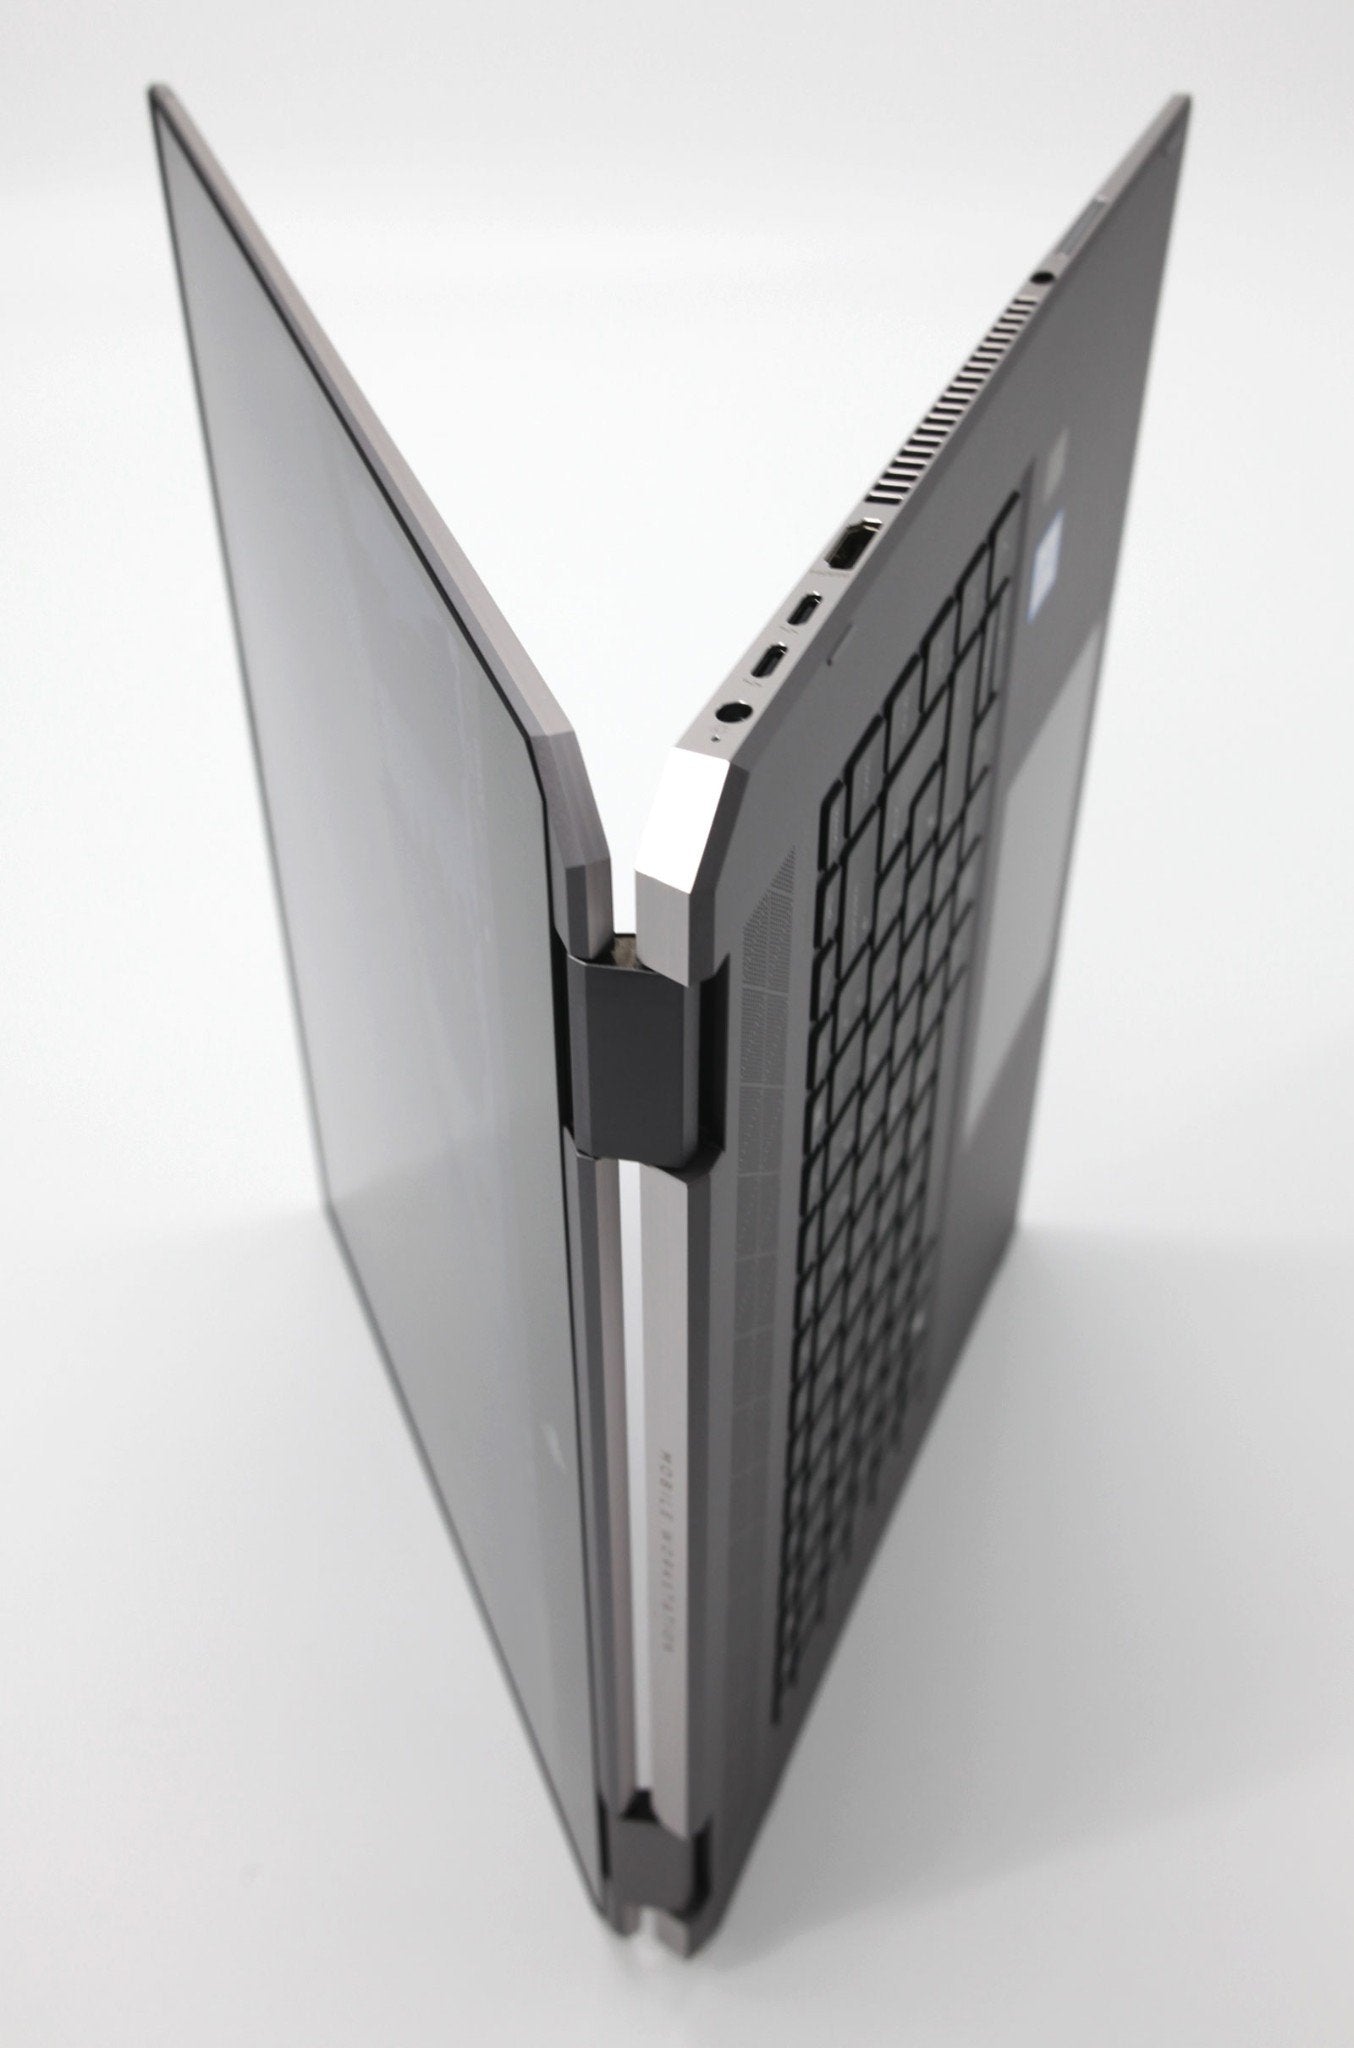 HP ZBook Studio x360 G5 2in1 Touch Laptop Core i7-8850H, 32GB RAM 256GB Warranty - CruiseTech